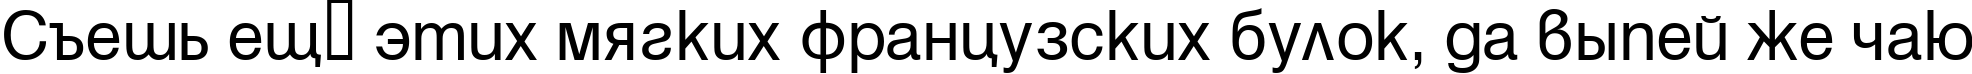 Пример написания шрифтом Hemus текста на русском